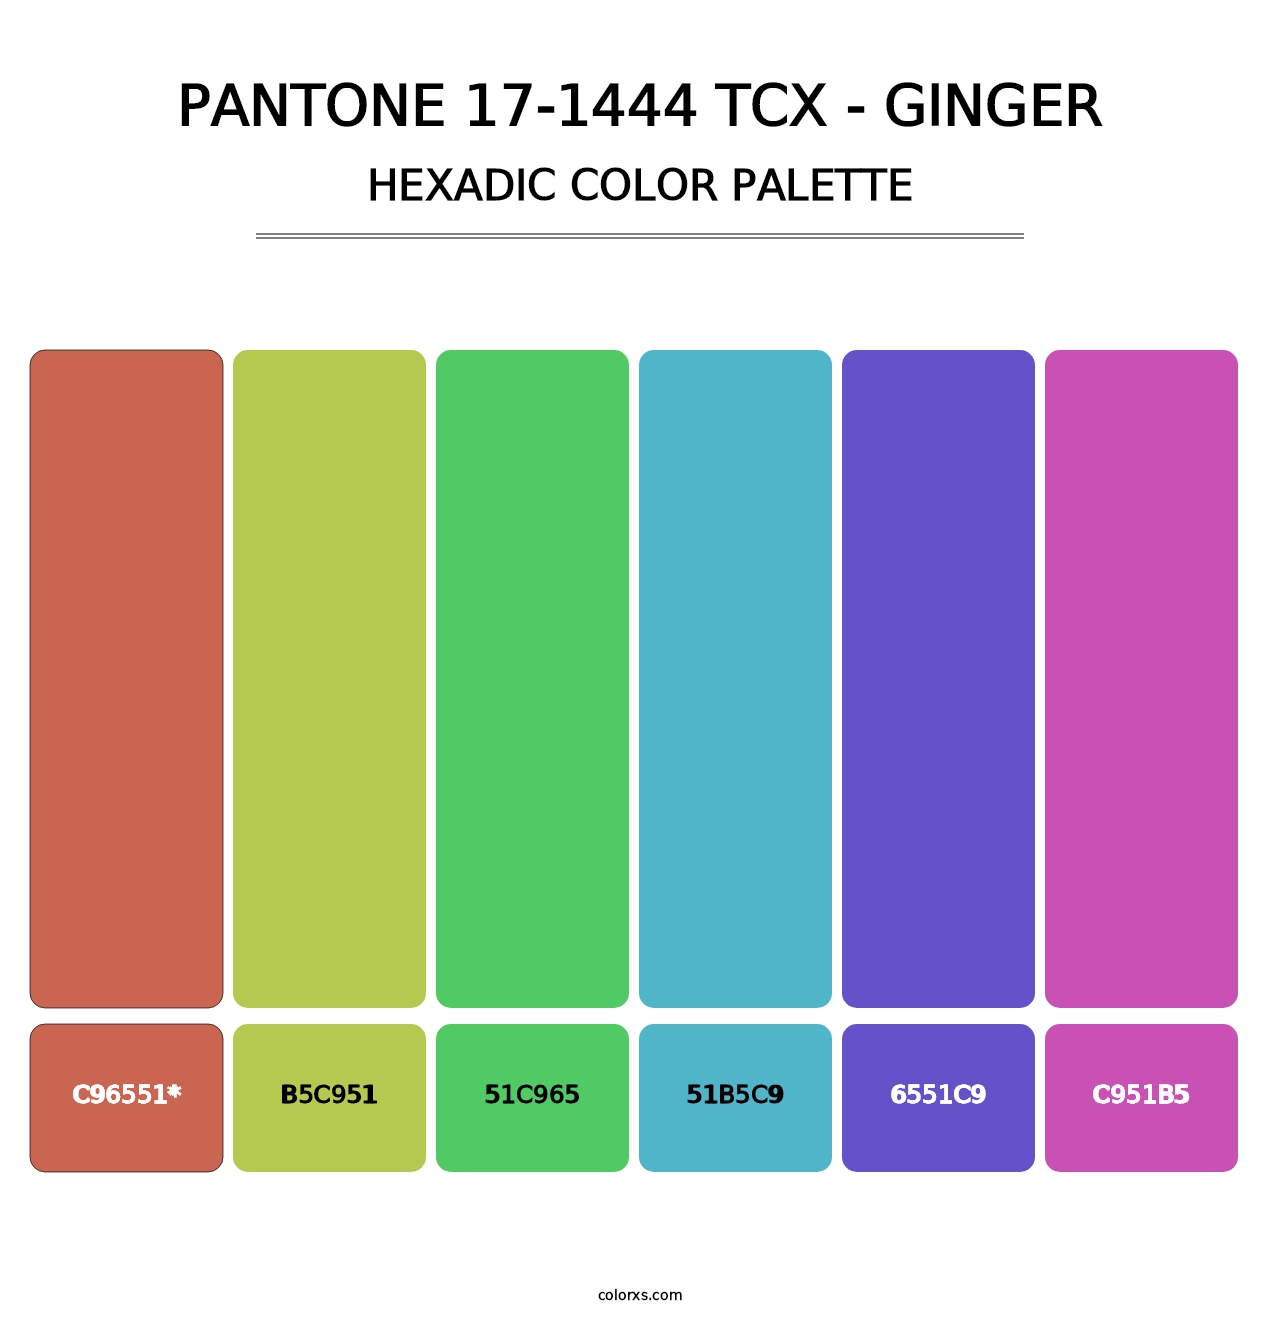 PANTONE 17-1444 TCX - Ginger - Hexadic Color Palette